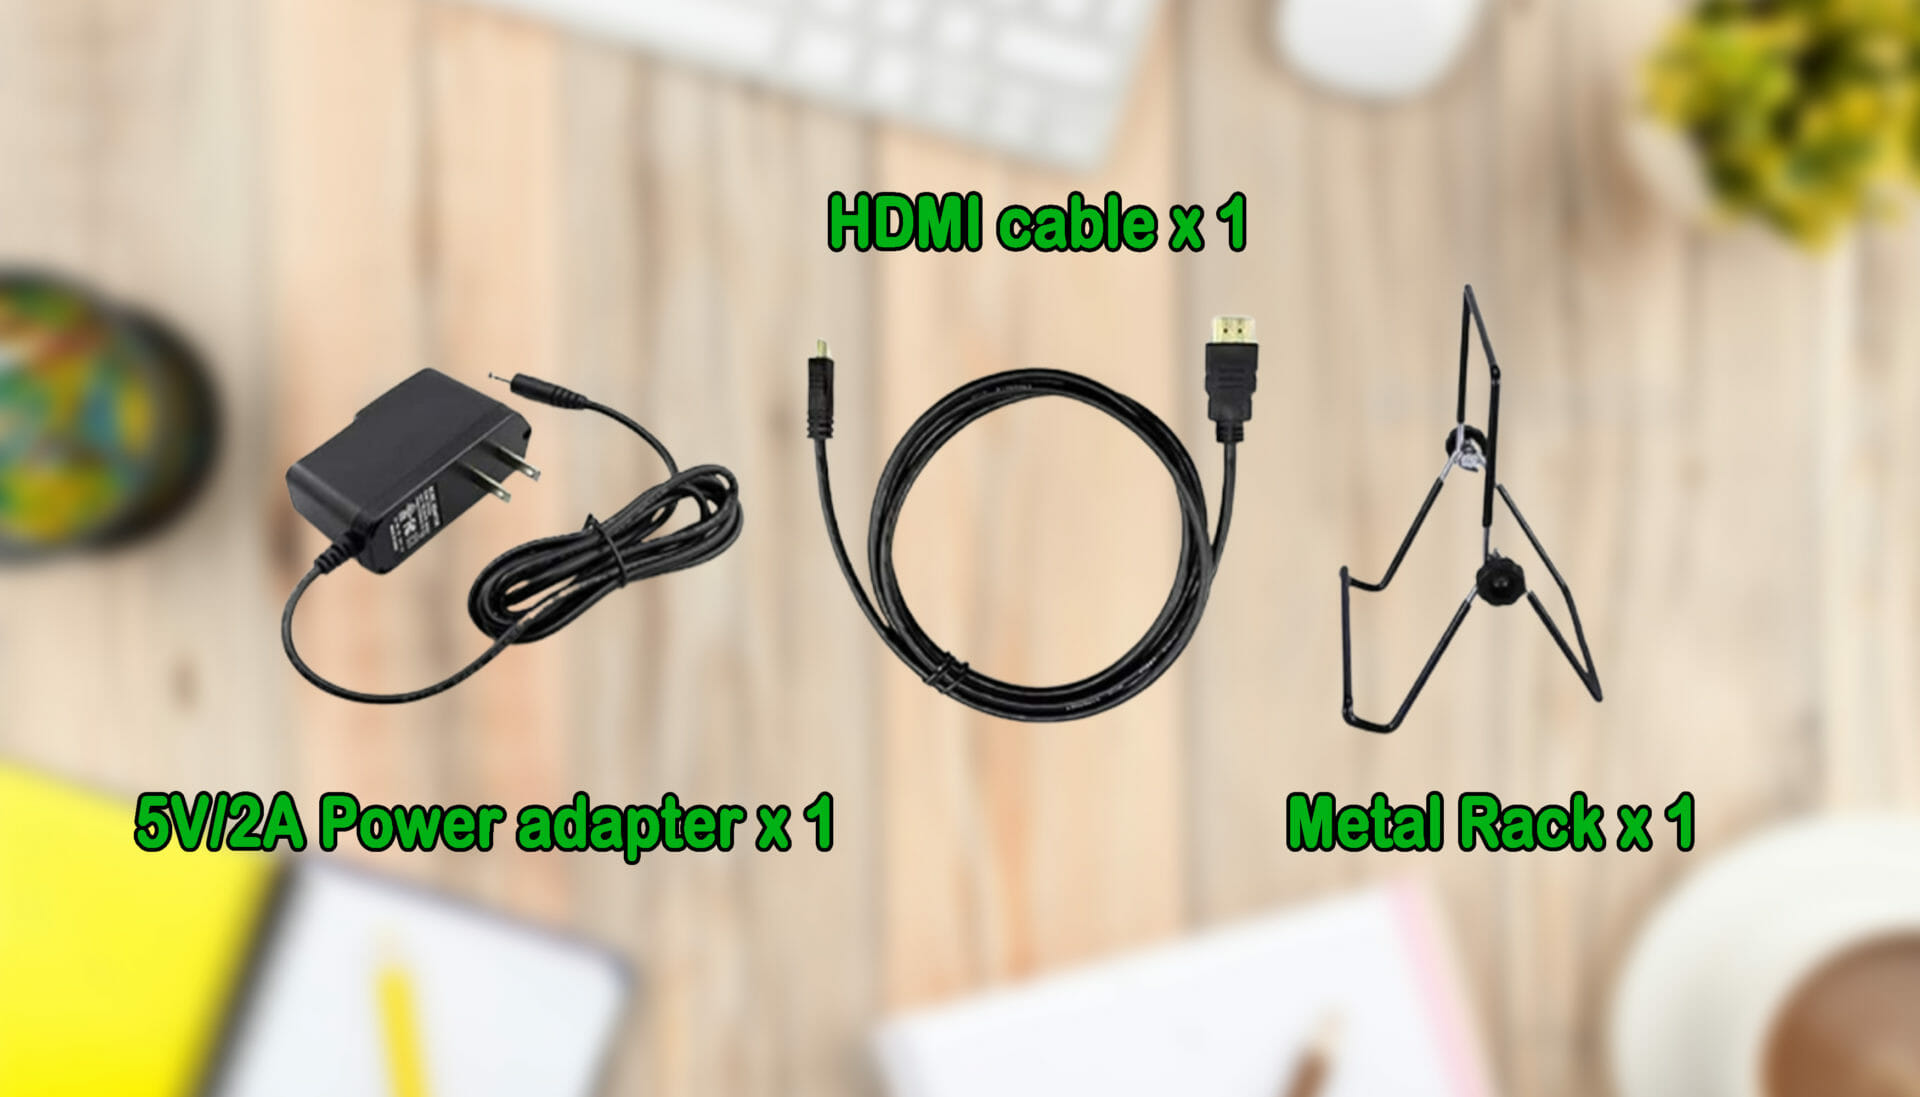 Elecrow 13.3-inch Portable Monitor cables